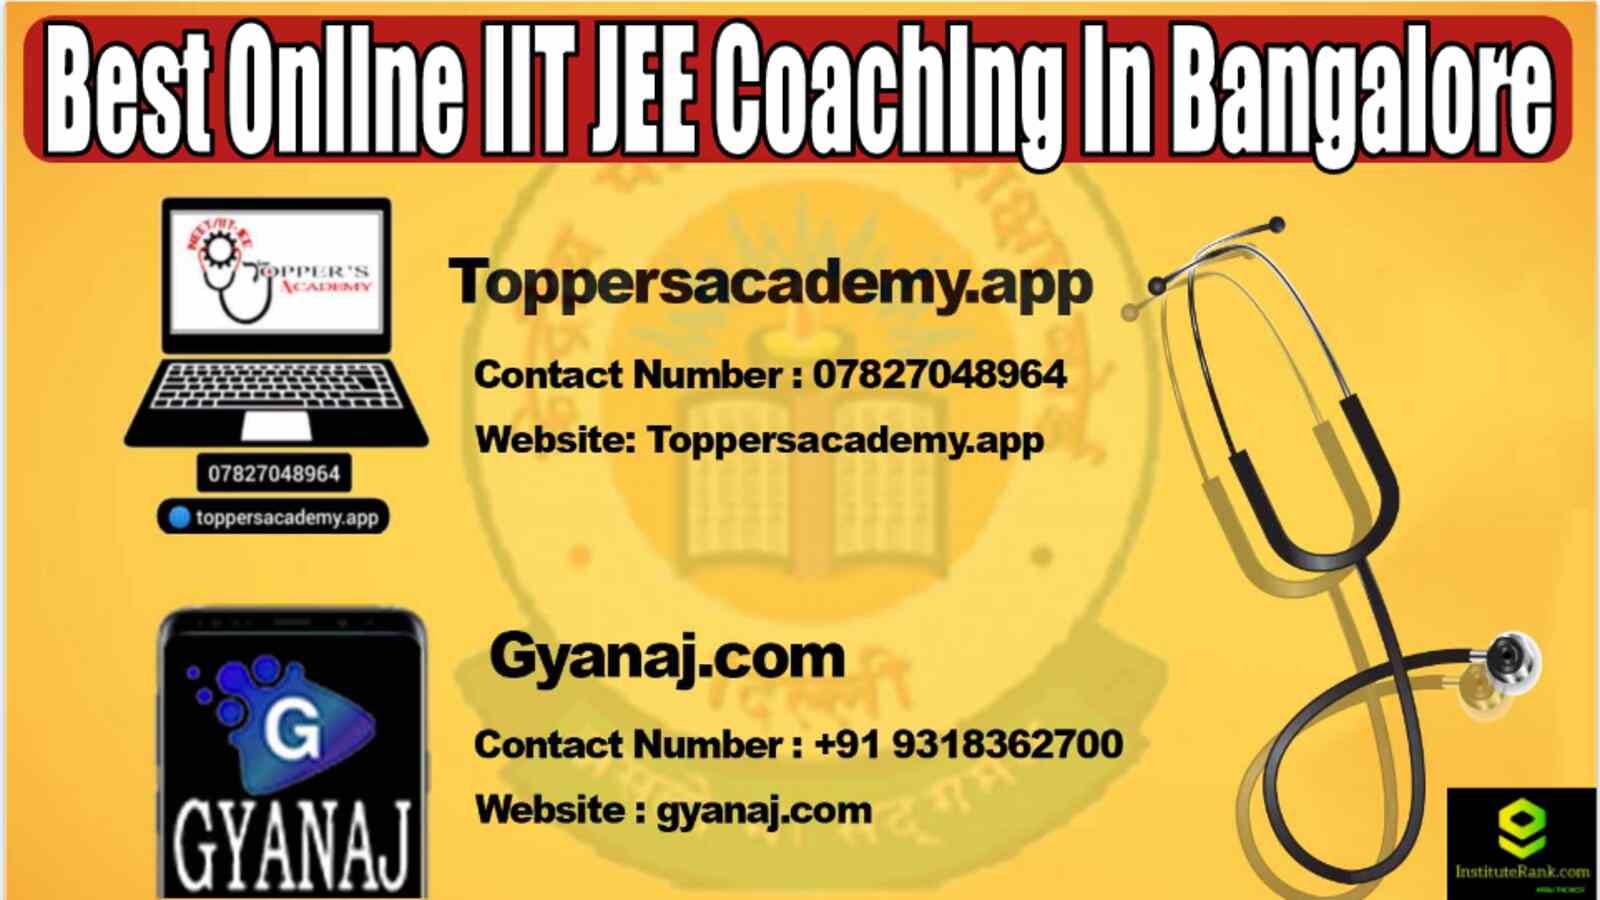 Best Online IIT JEE Coaching in Bangalore 2022